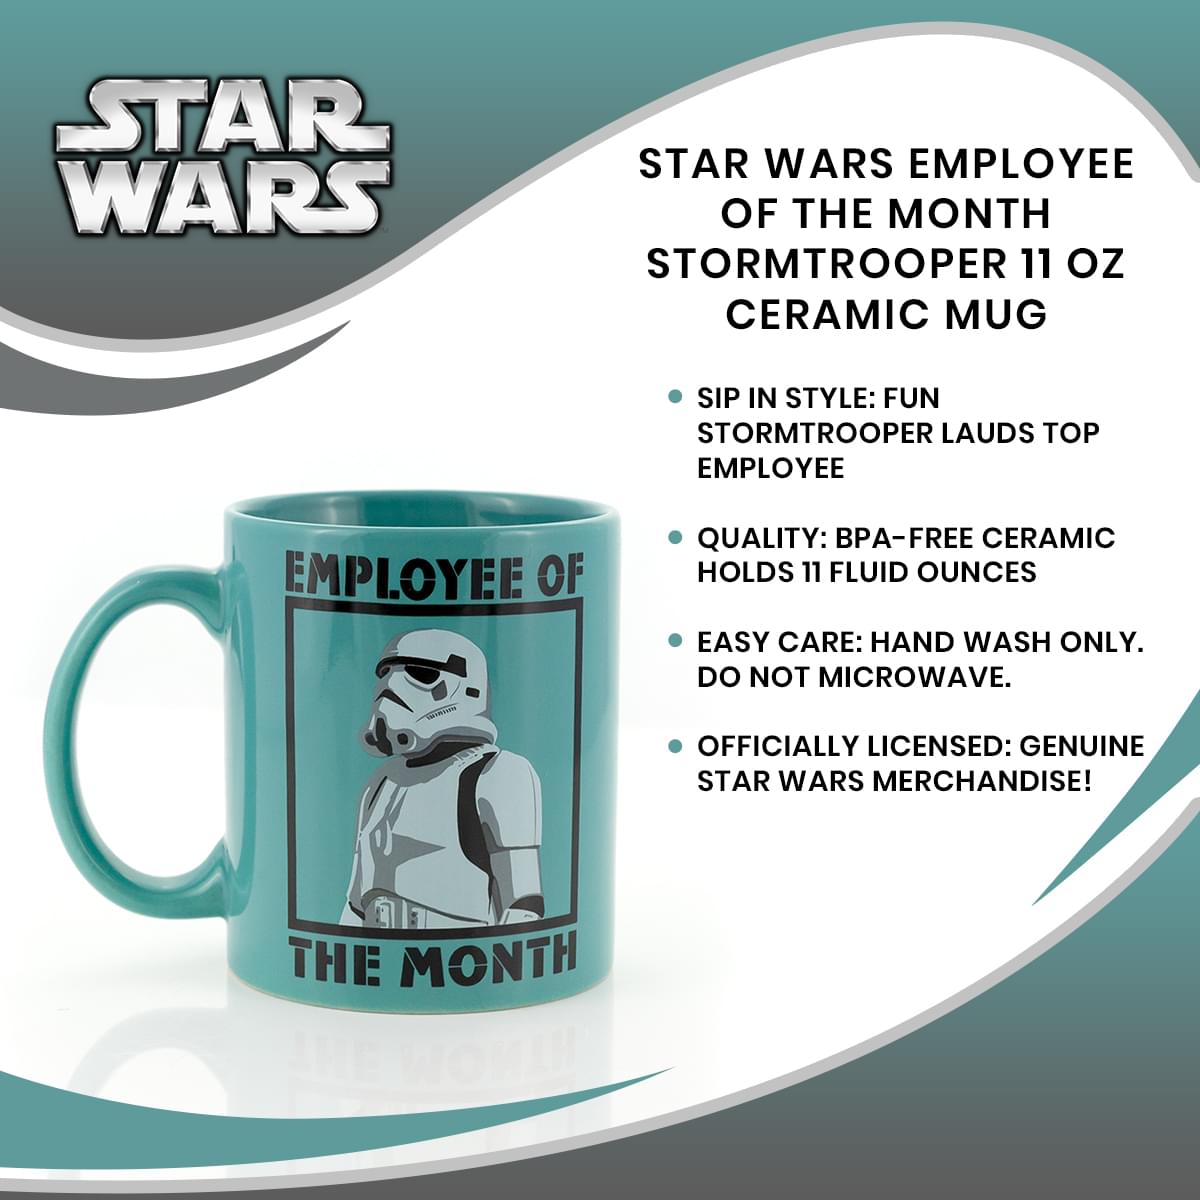 Star Wars “Employee of the Month” Stormtrooper 11 oz Ceramic Mug